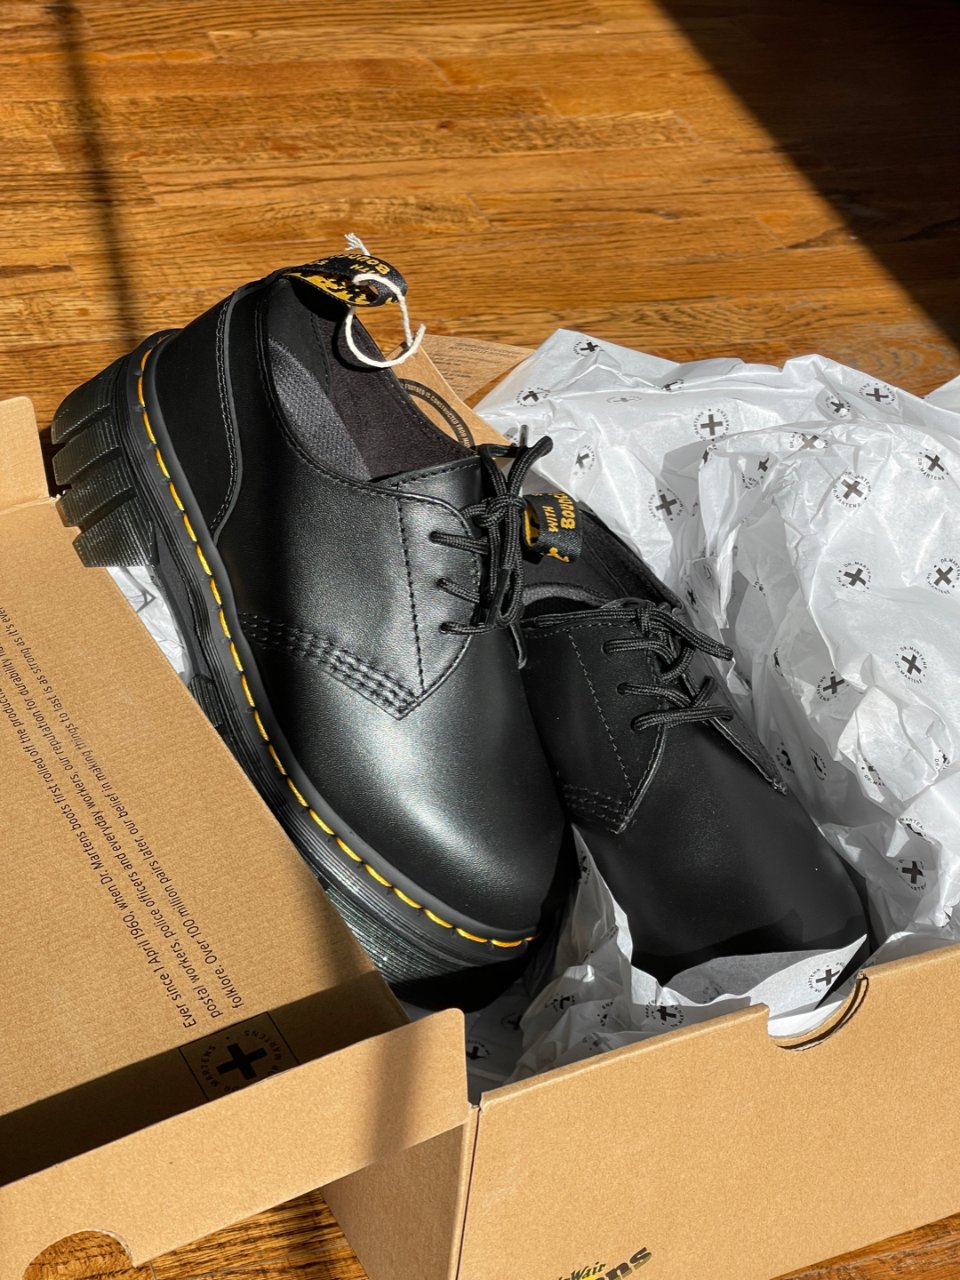 Audrick Nappa Leather Platform Shoes | Dr. Martens